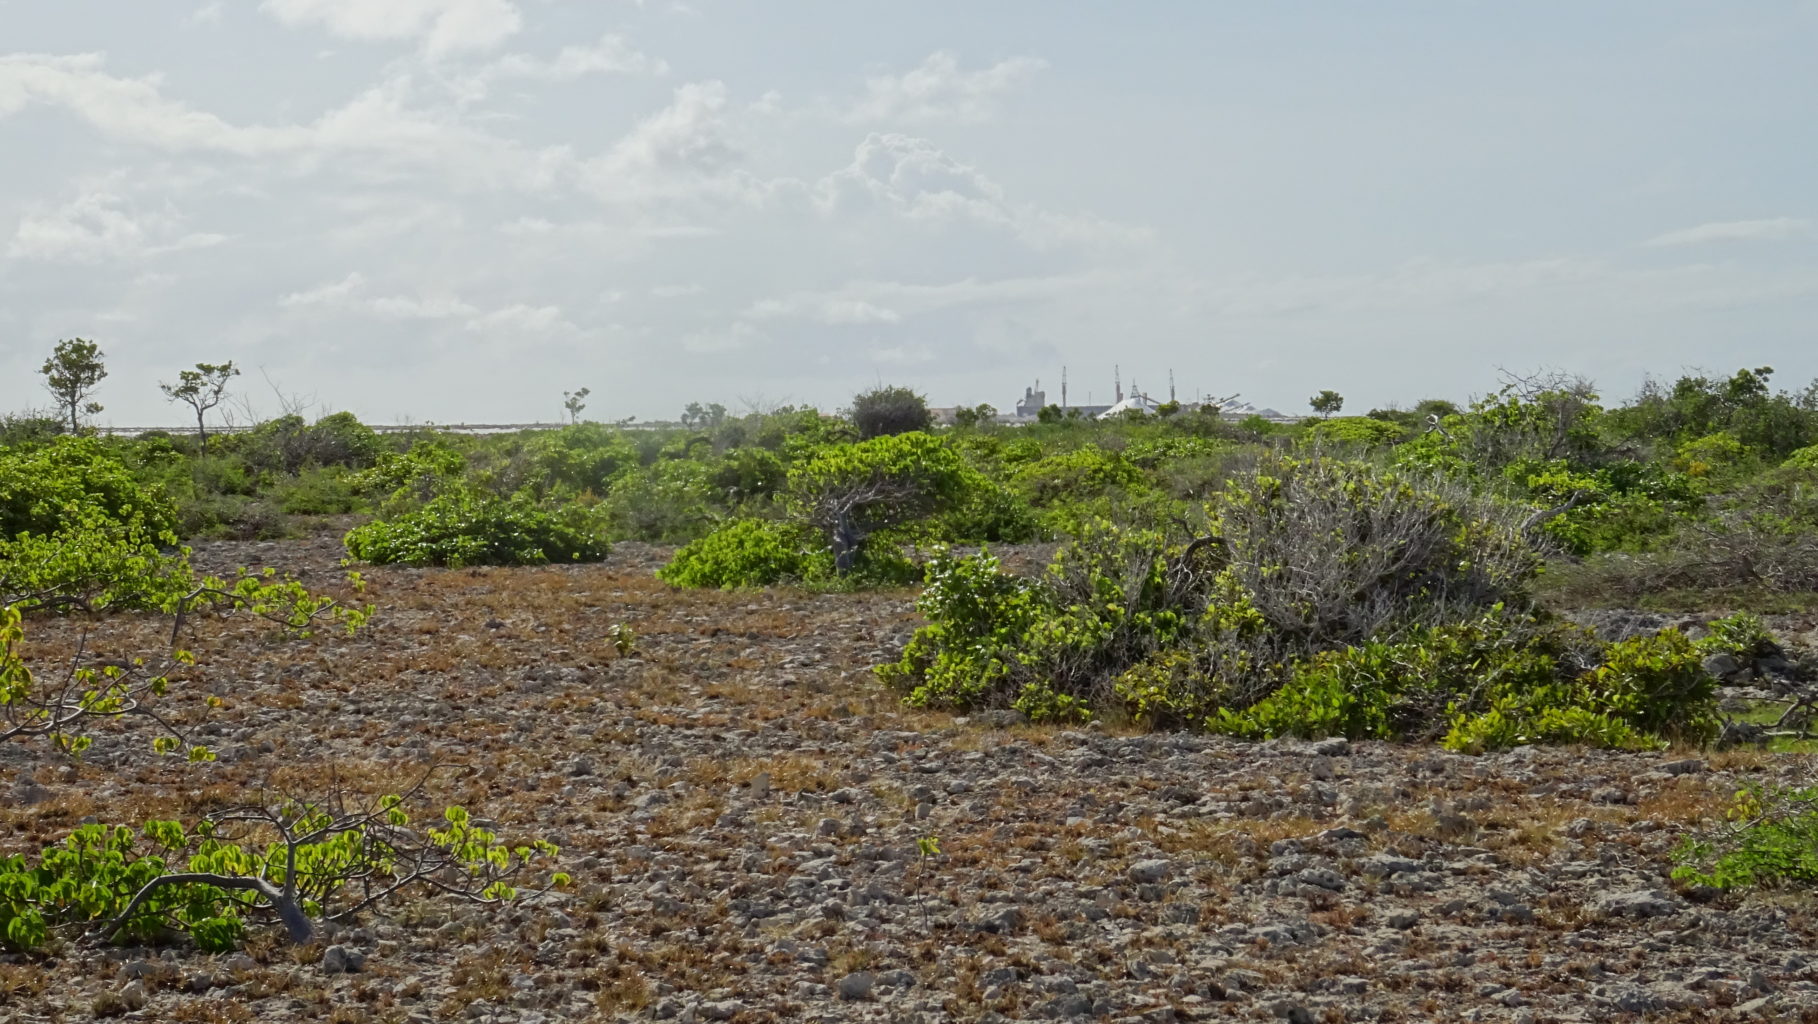 Overgrazed habitat on Bonaire Island, Caribbean Netherlands